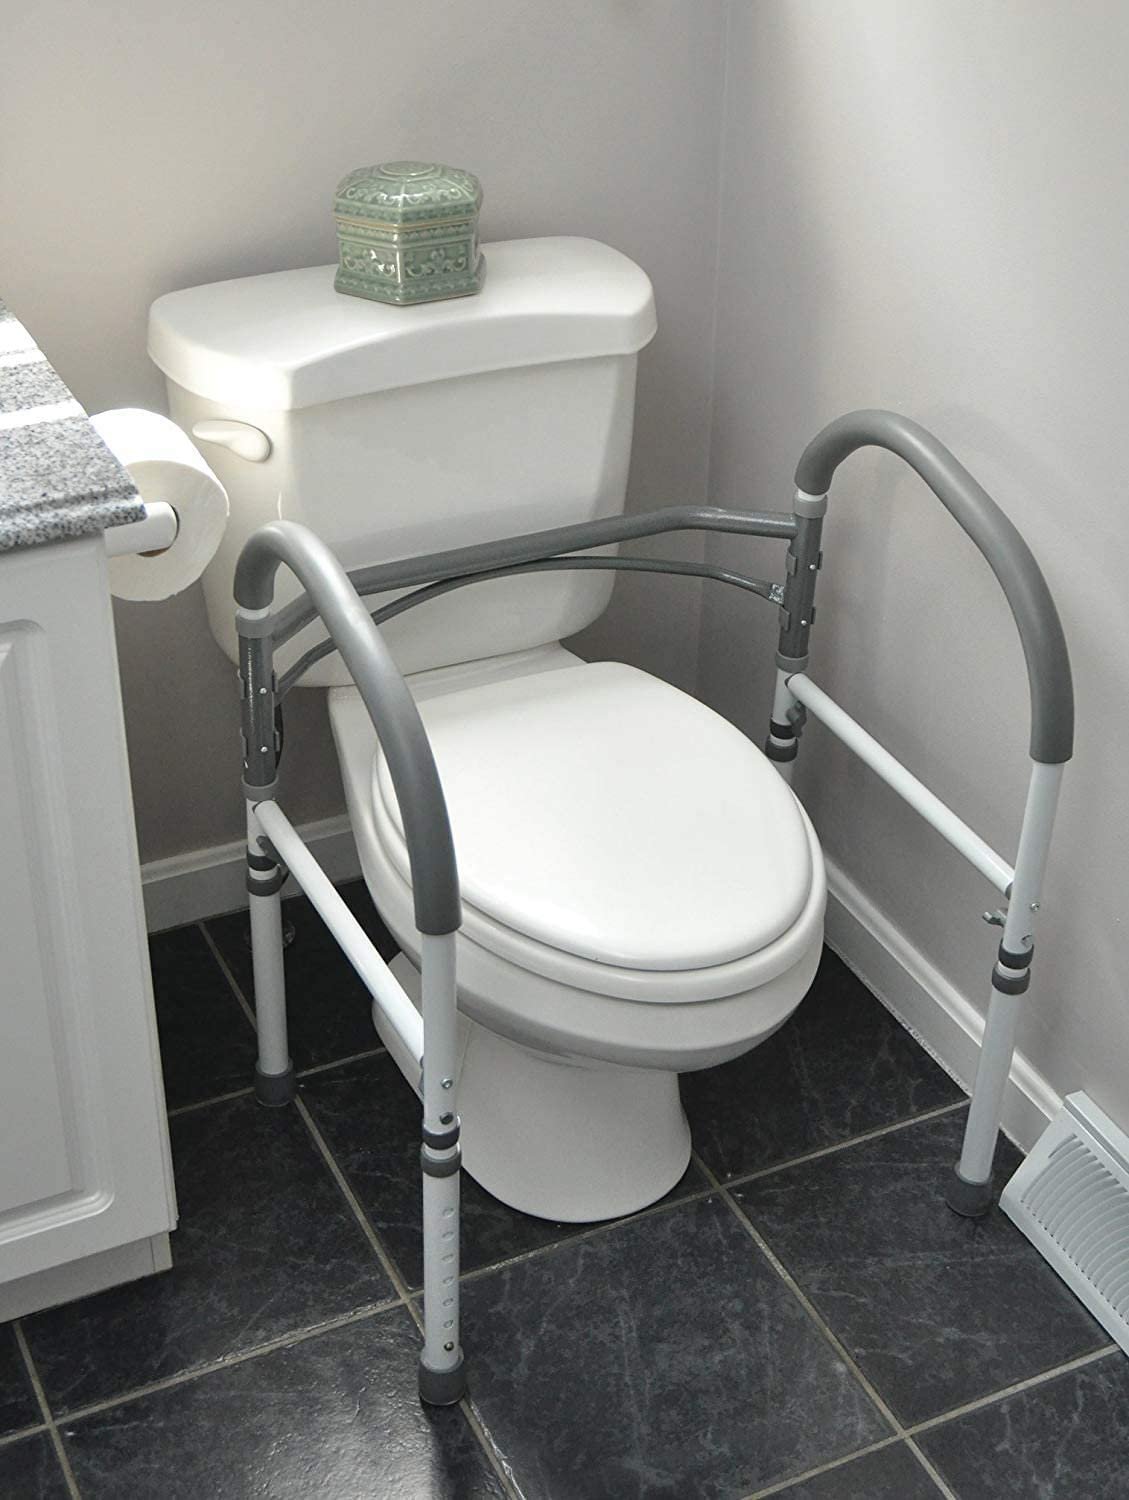 Vaunn Deluxe Bathroom Safety Toilet Rail - Adjustable Toilet Safety Frame - Medical Handrail Assist Grab bar Handle